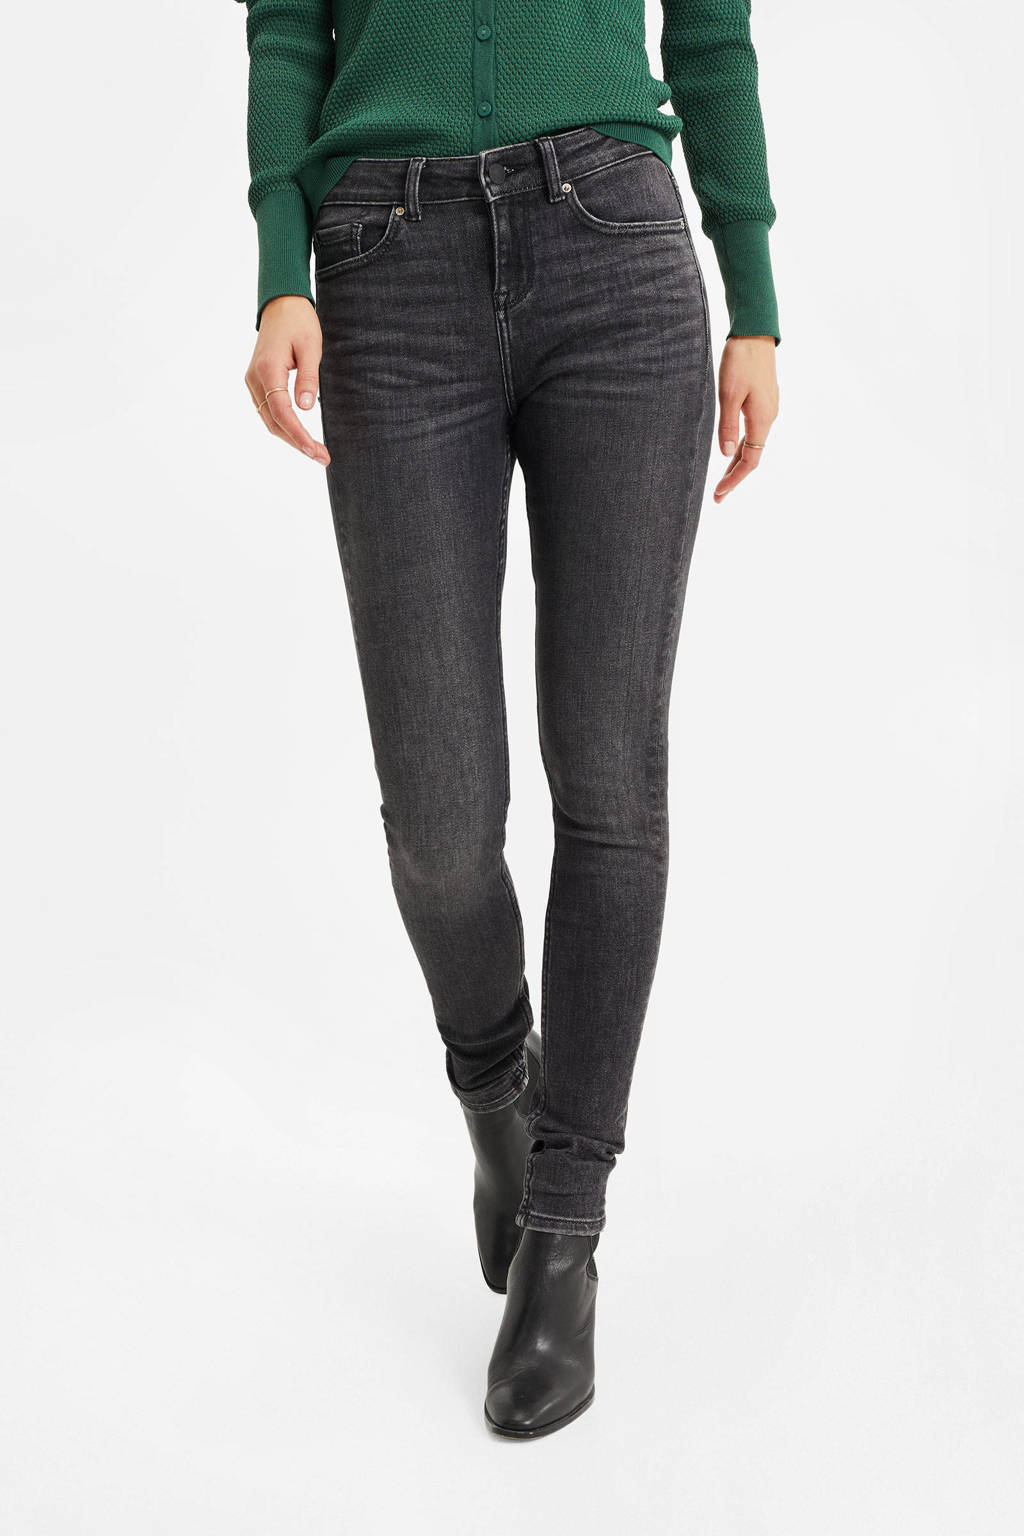 WE Fashion Blue Ridge super skinny jeans dark grey